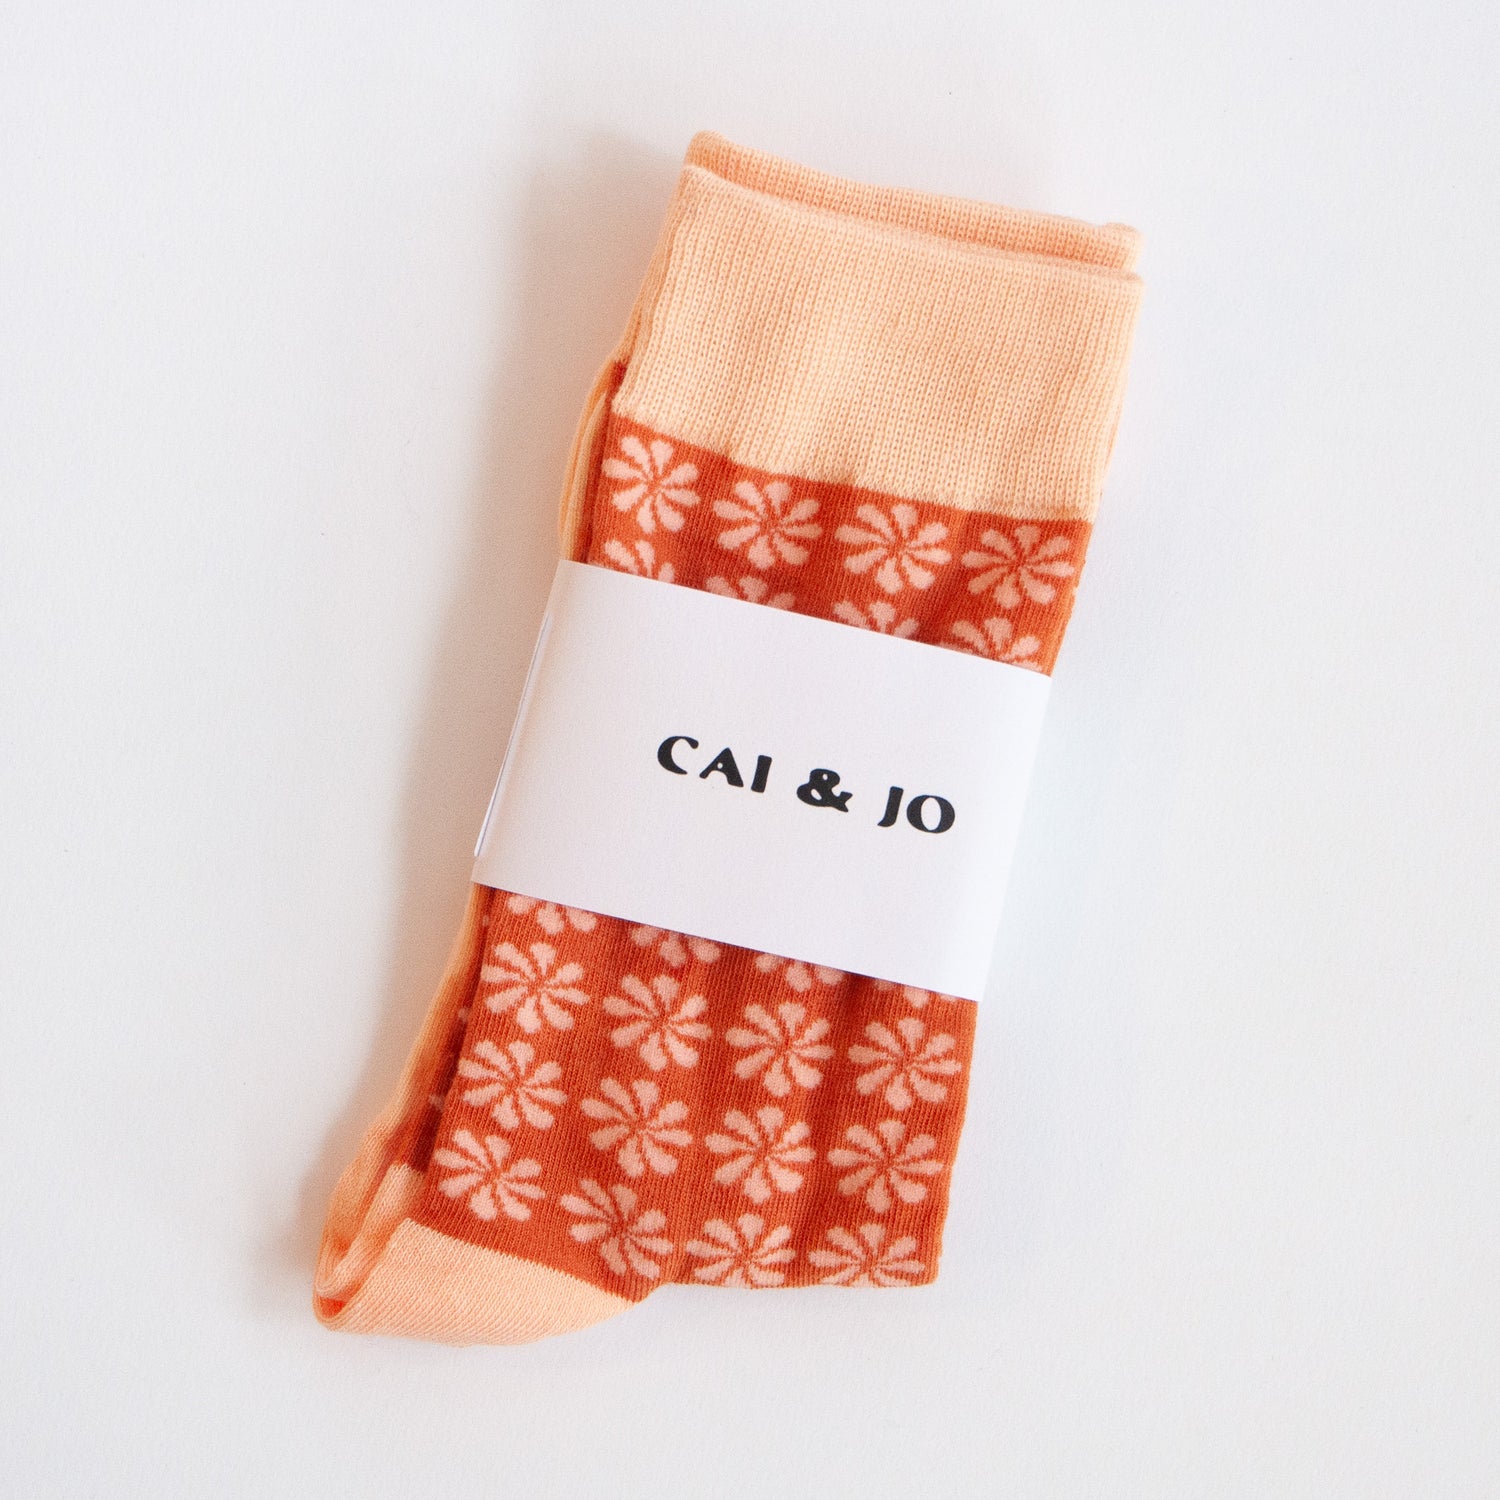 Socks by Cai & Jo